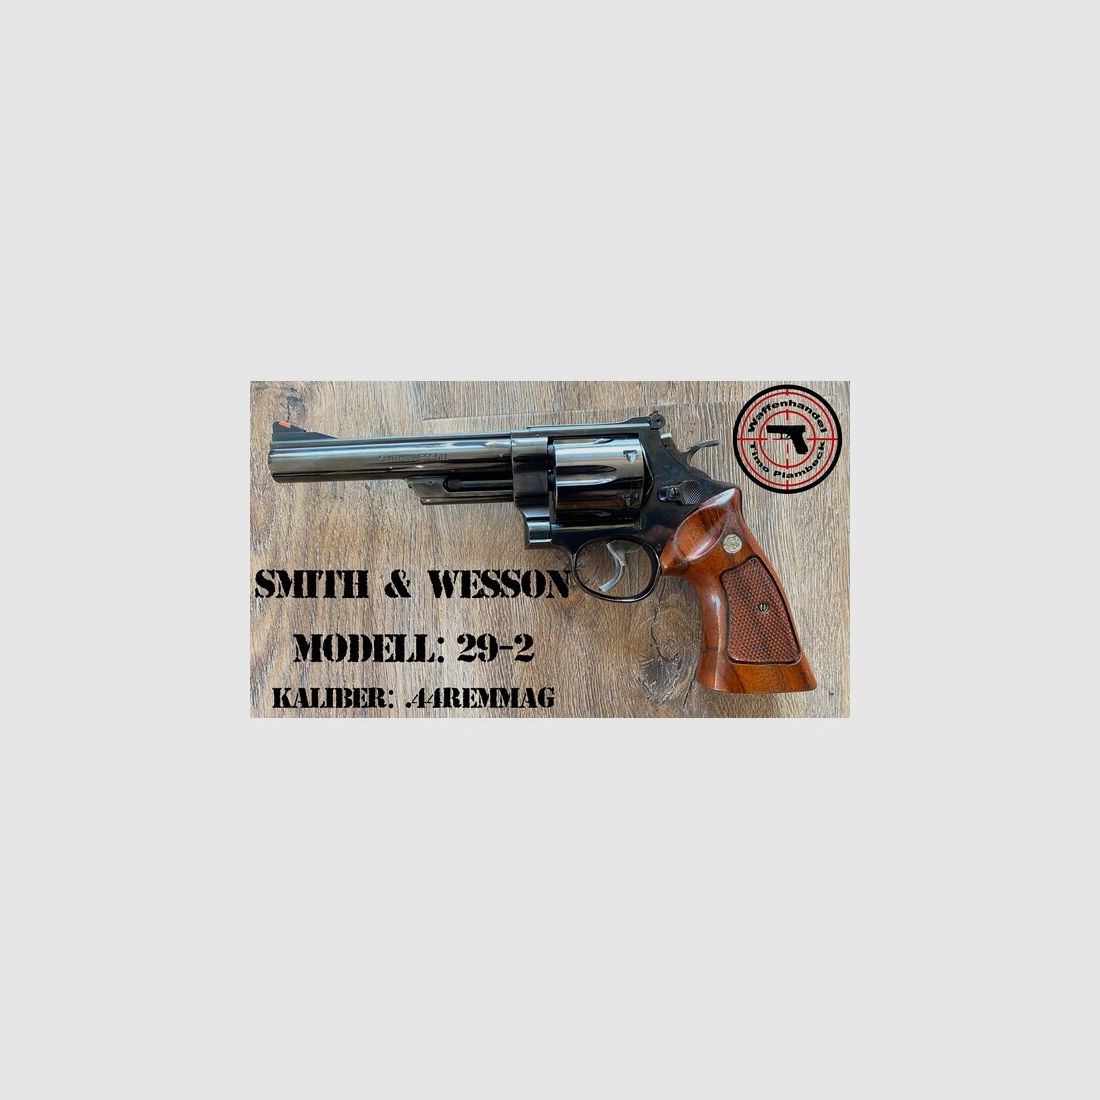 Dirty Harry Revolver Smith & Wesson 29-2 mit 6"-Lauf im Kaliber .44RemMag